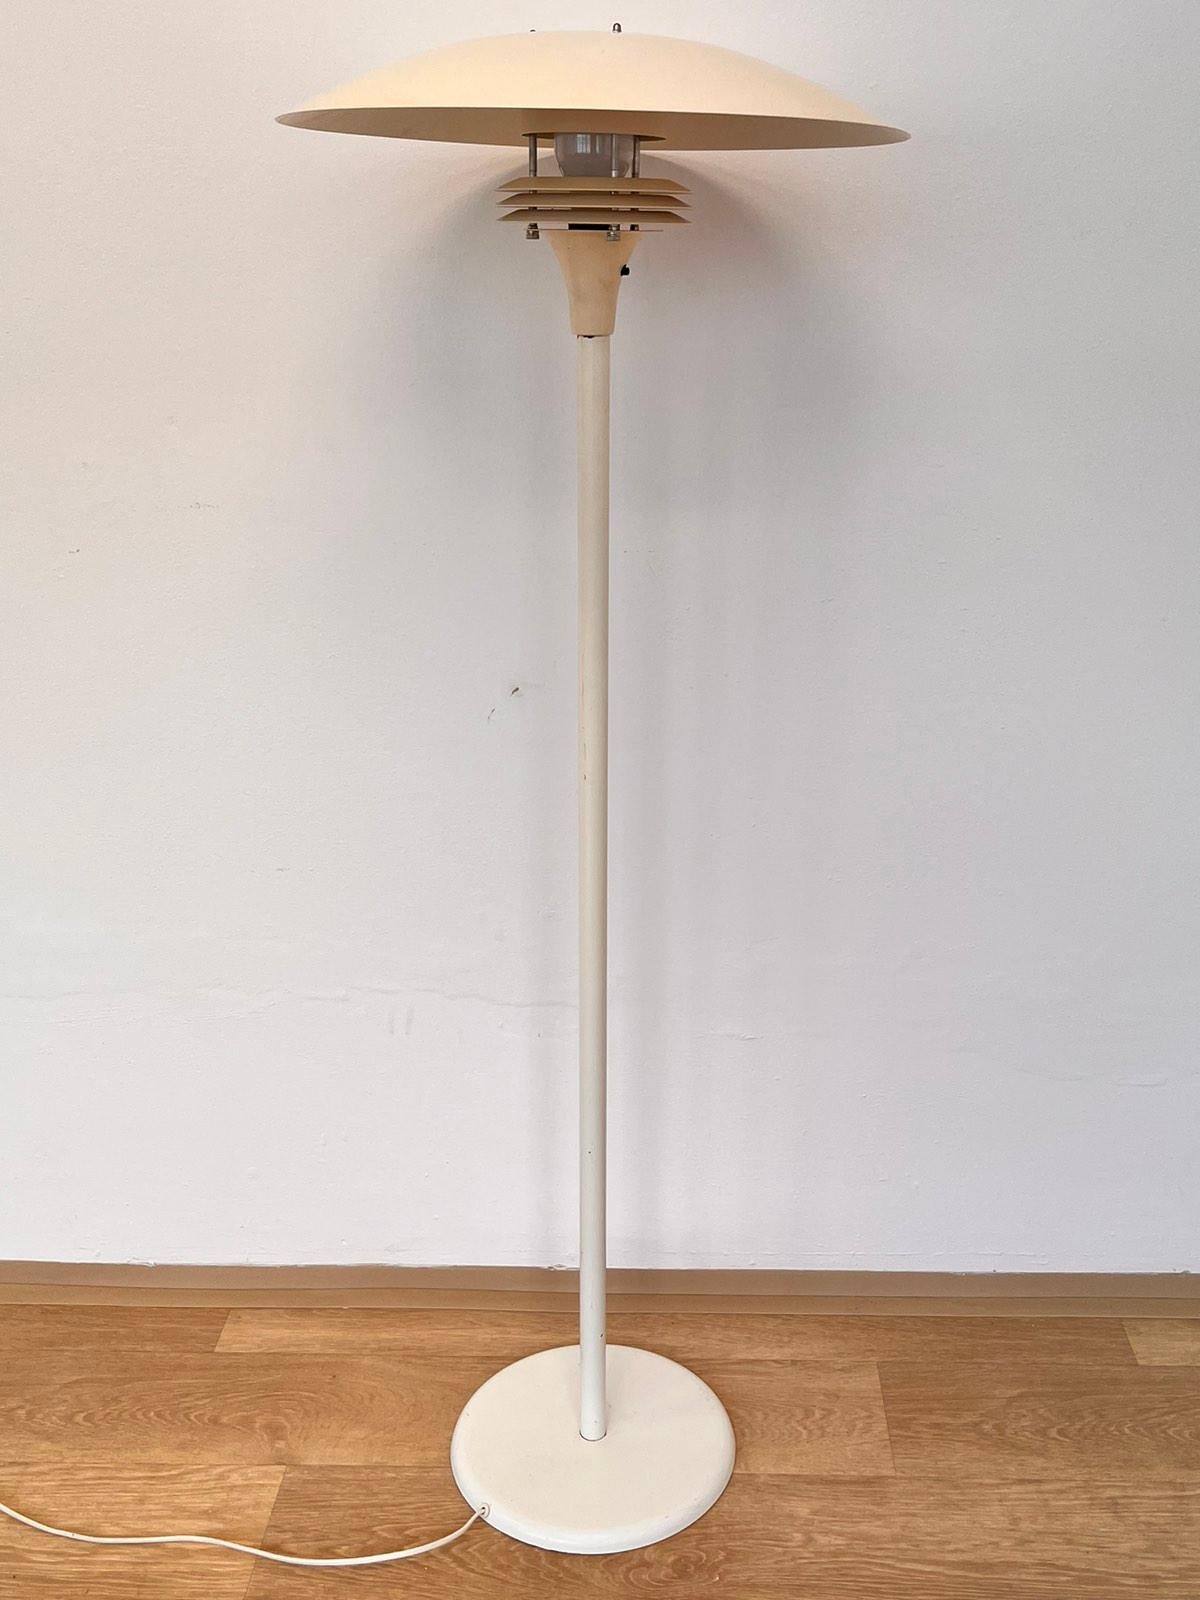 Mid-20th Century Rare Midcentury Floor Lamp in style of Poul Henningsen, Denmark, 1960s For Sale